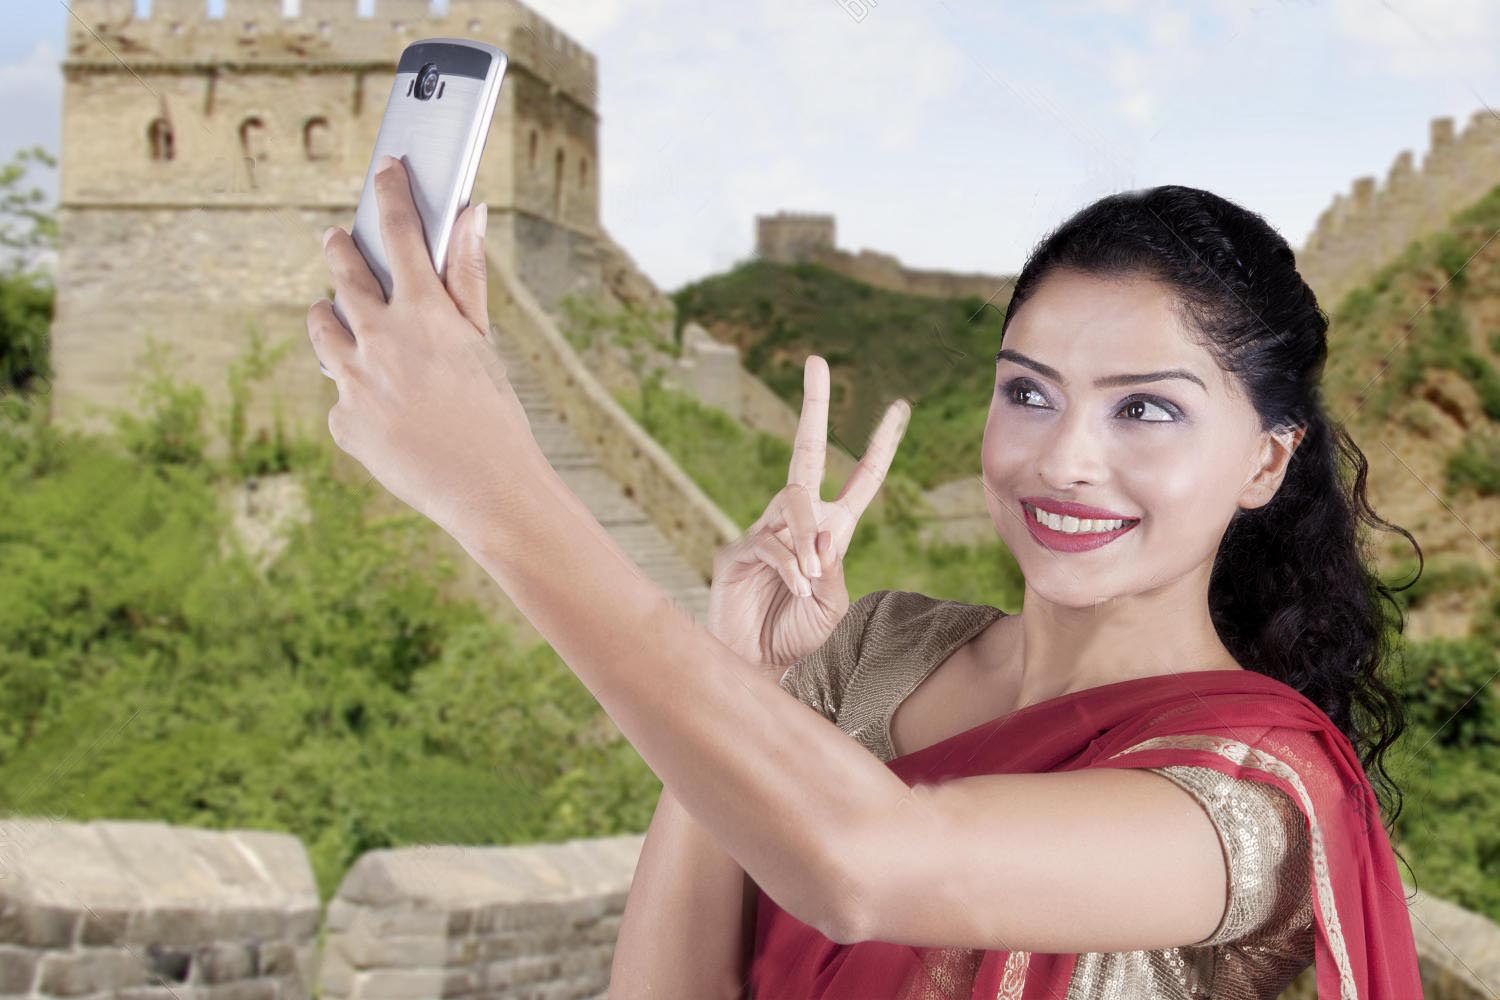 13 selfie poses for girls | Facetune